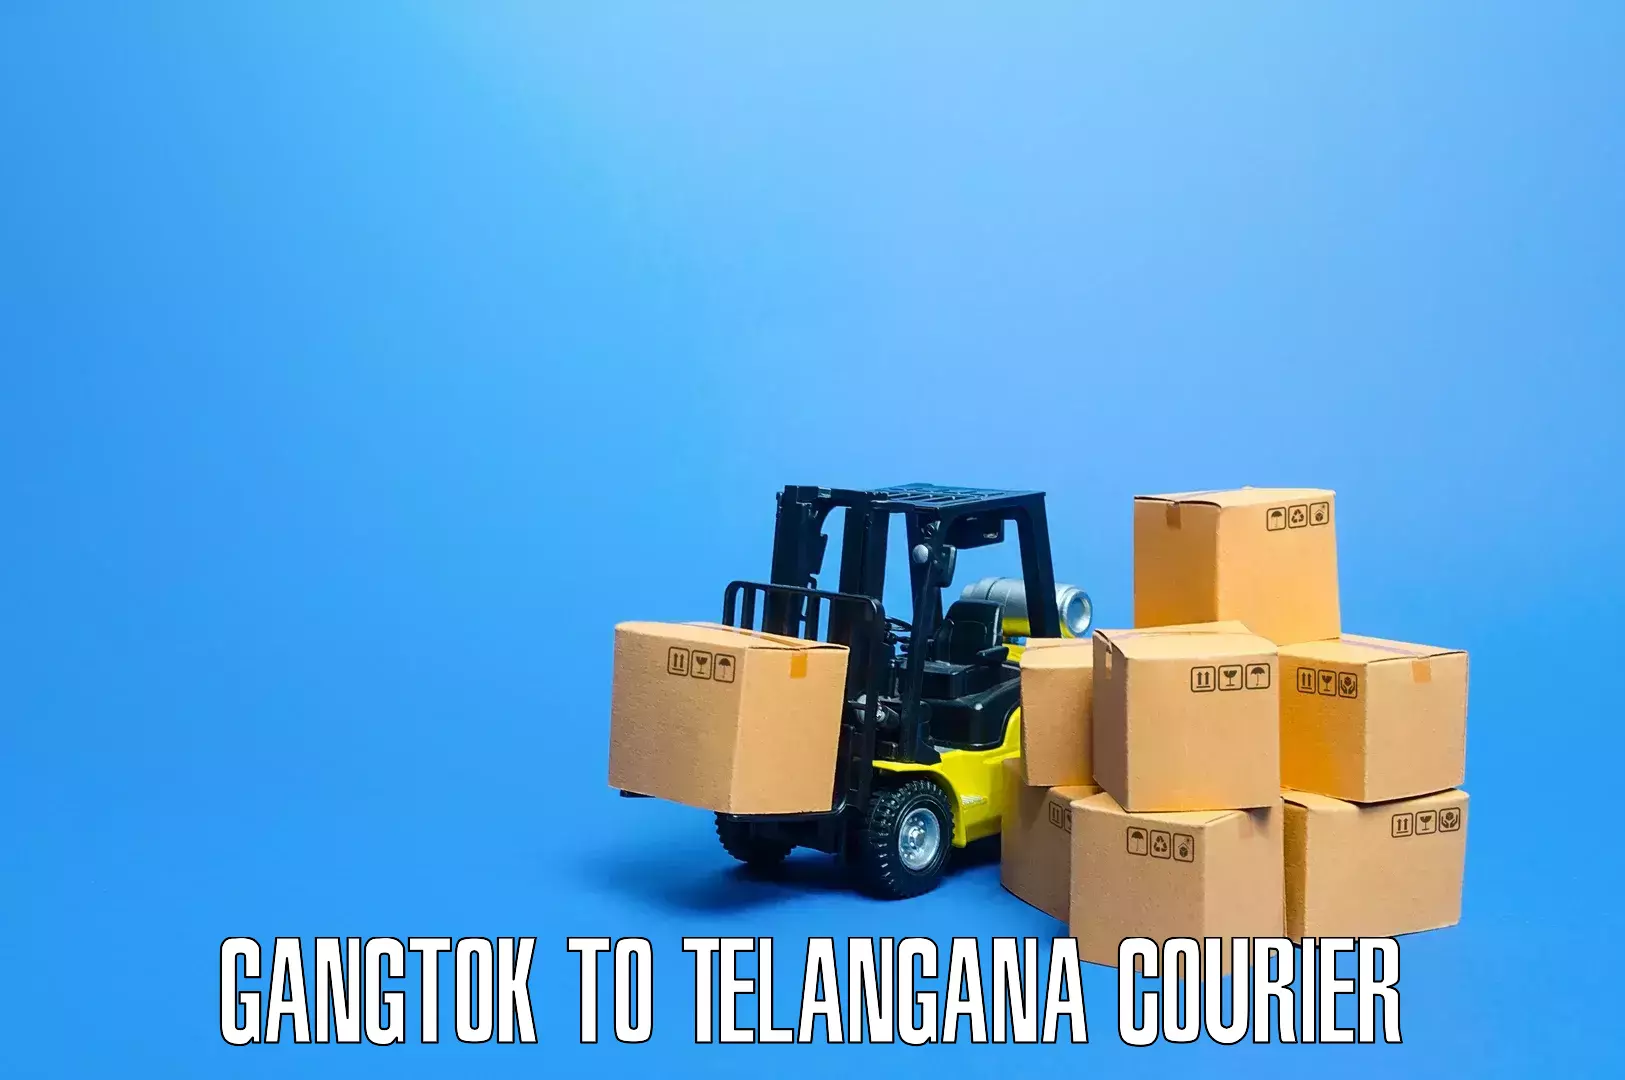 Furniture transport company Gangtok to Kacheguda